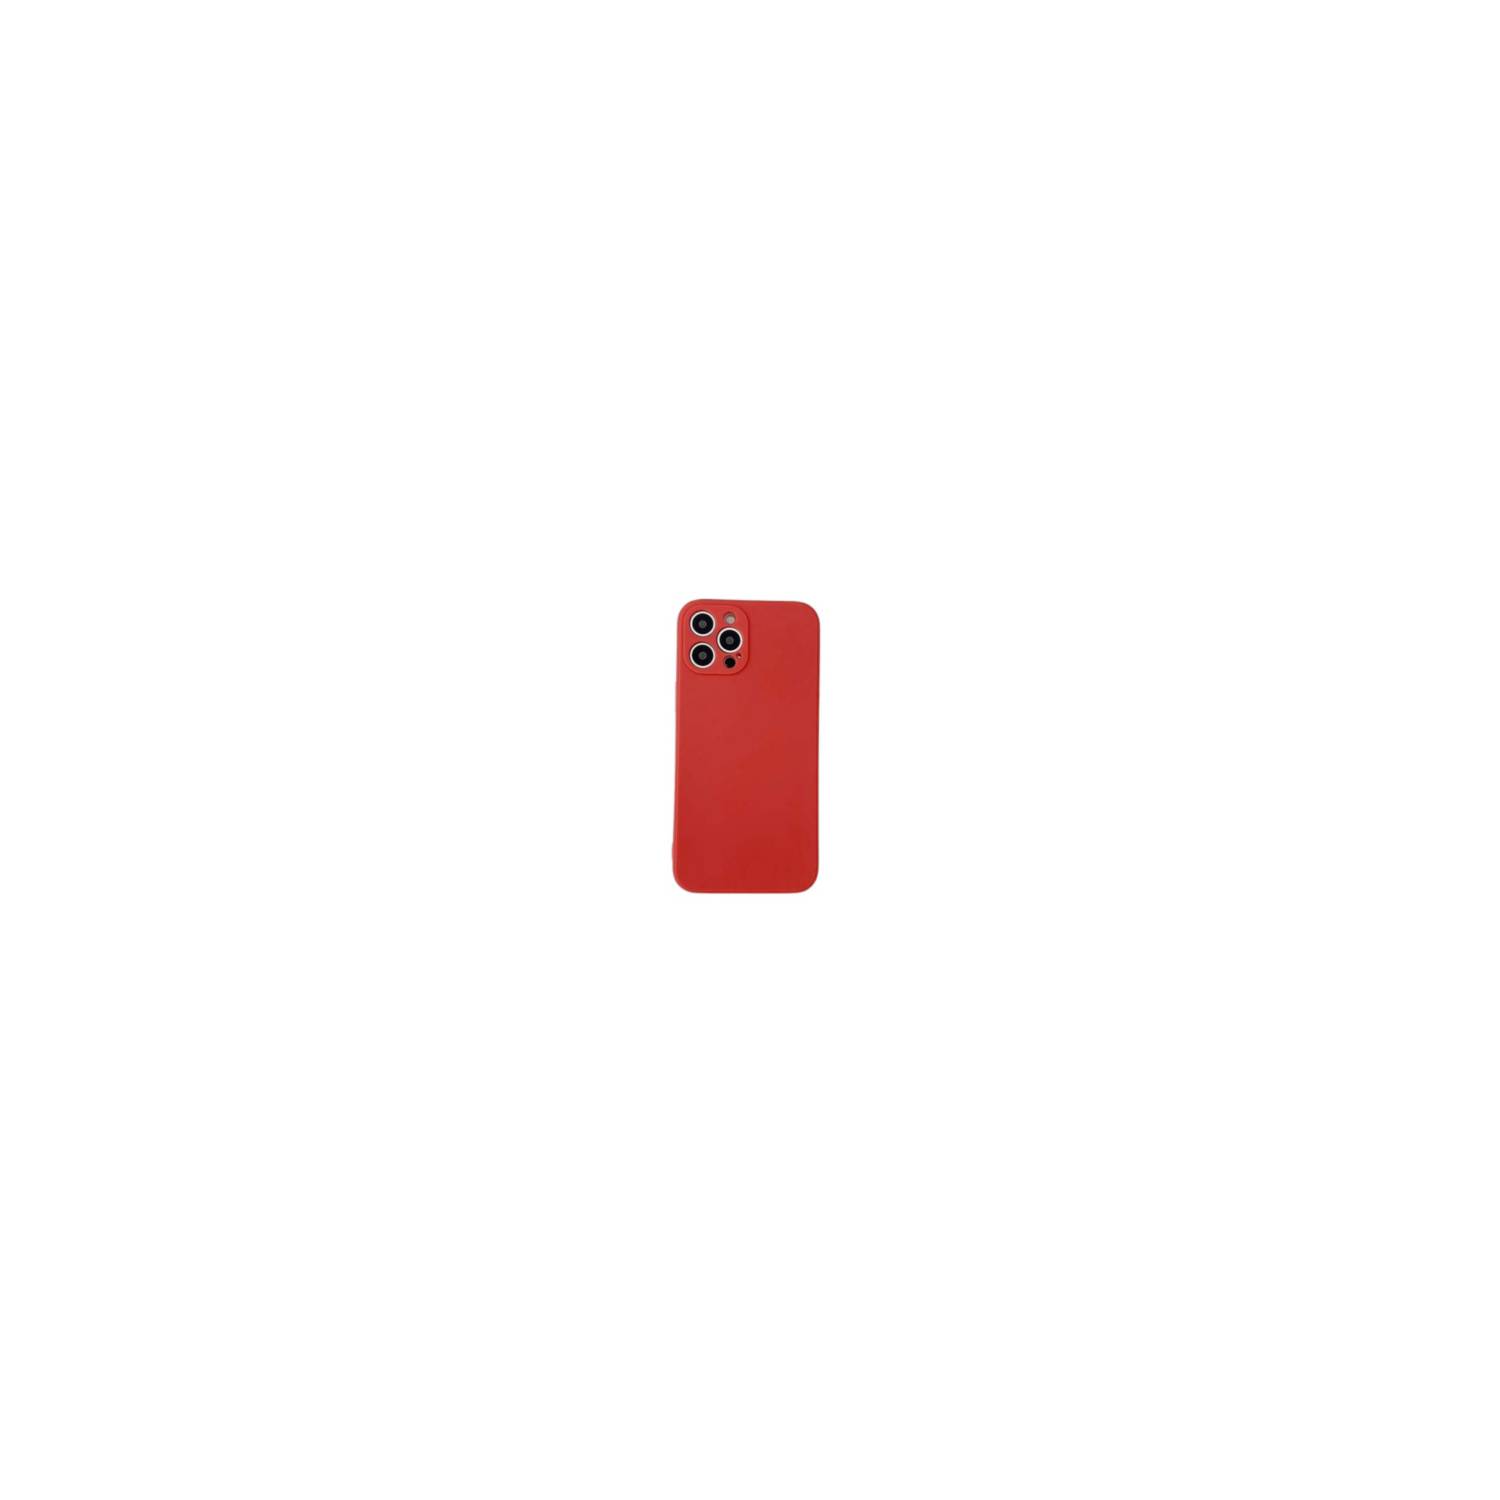 Carcasa iPhone 12 Pro Max Silicona Rojo -  - Tecnología para todos